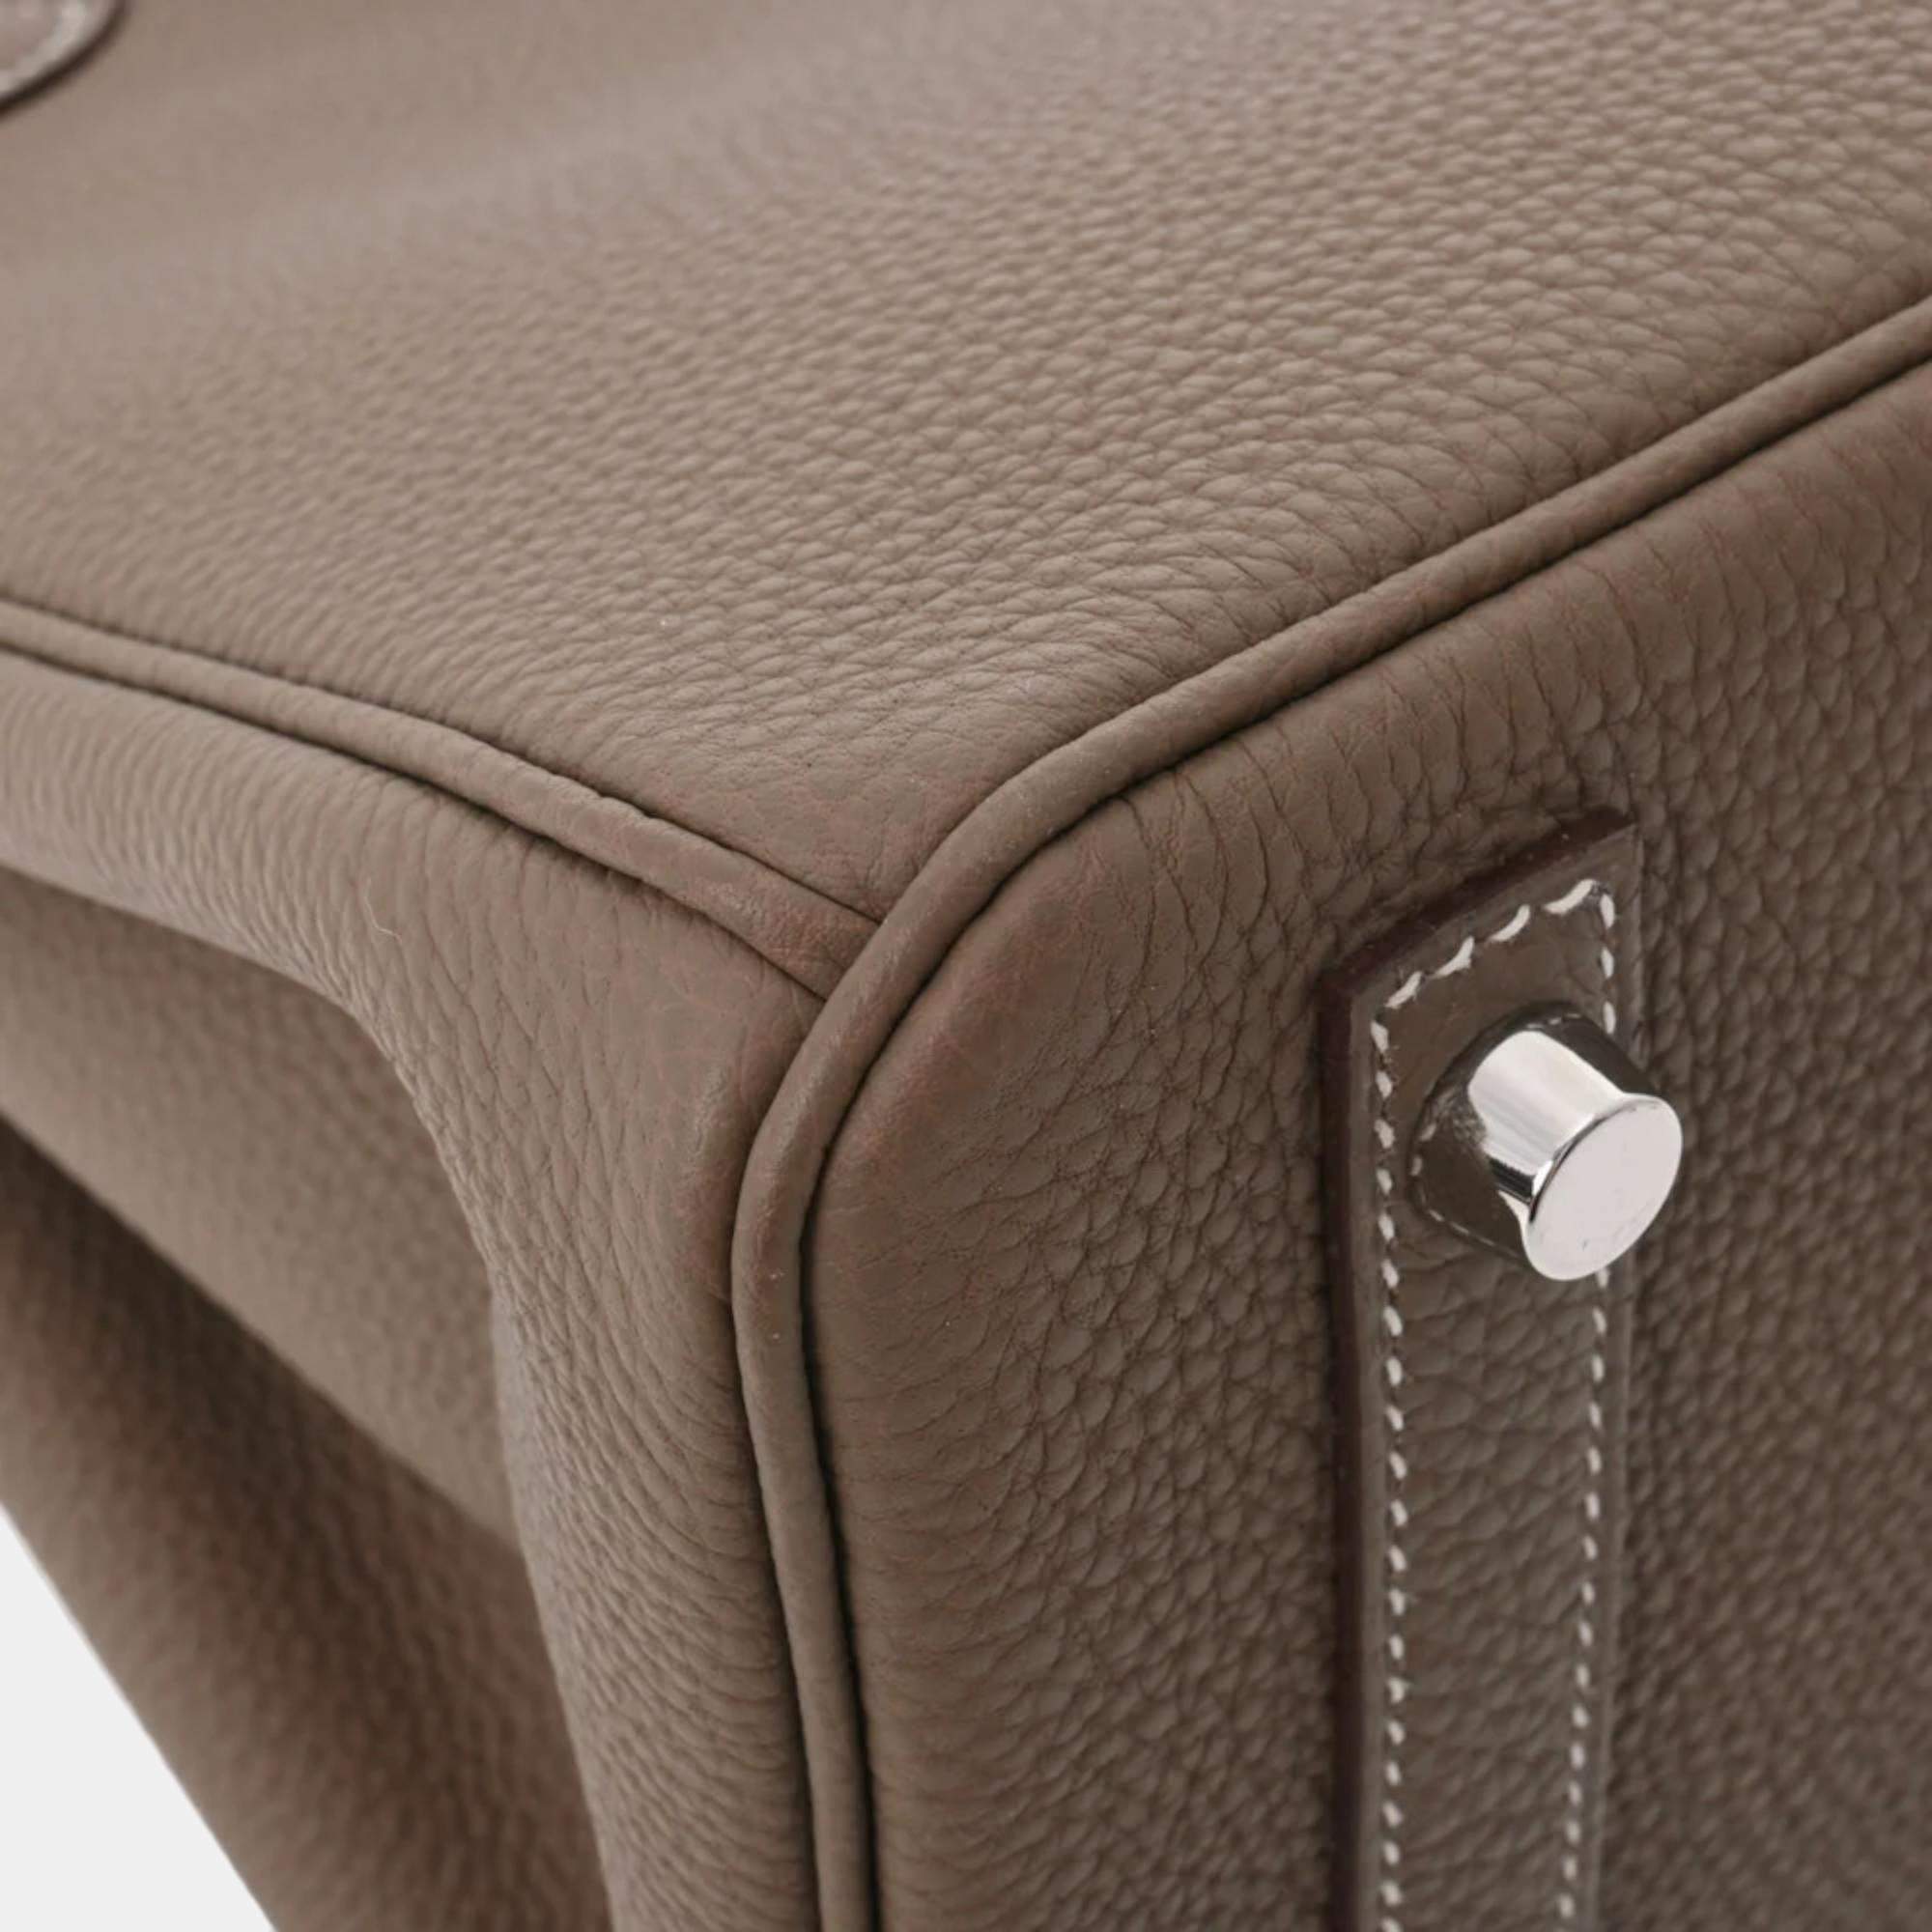 HERMÈS Birkin 30 handbag in Mushroom Togo leather with Palladium hardware  [Consigned]-Ginza Xiaoma – Authentic Hermès Boutique